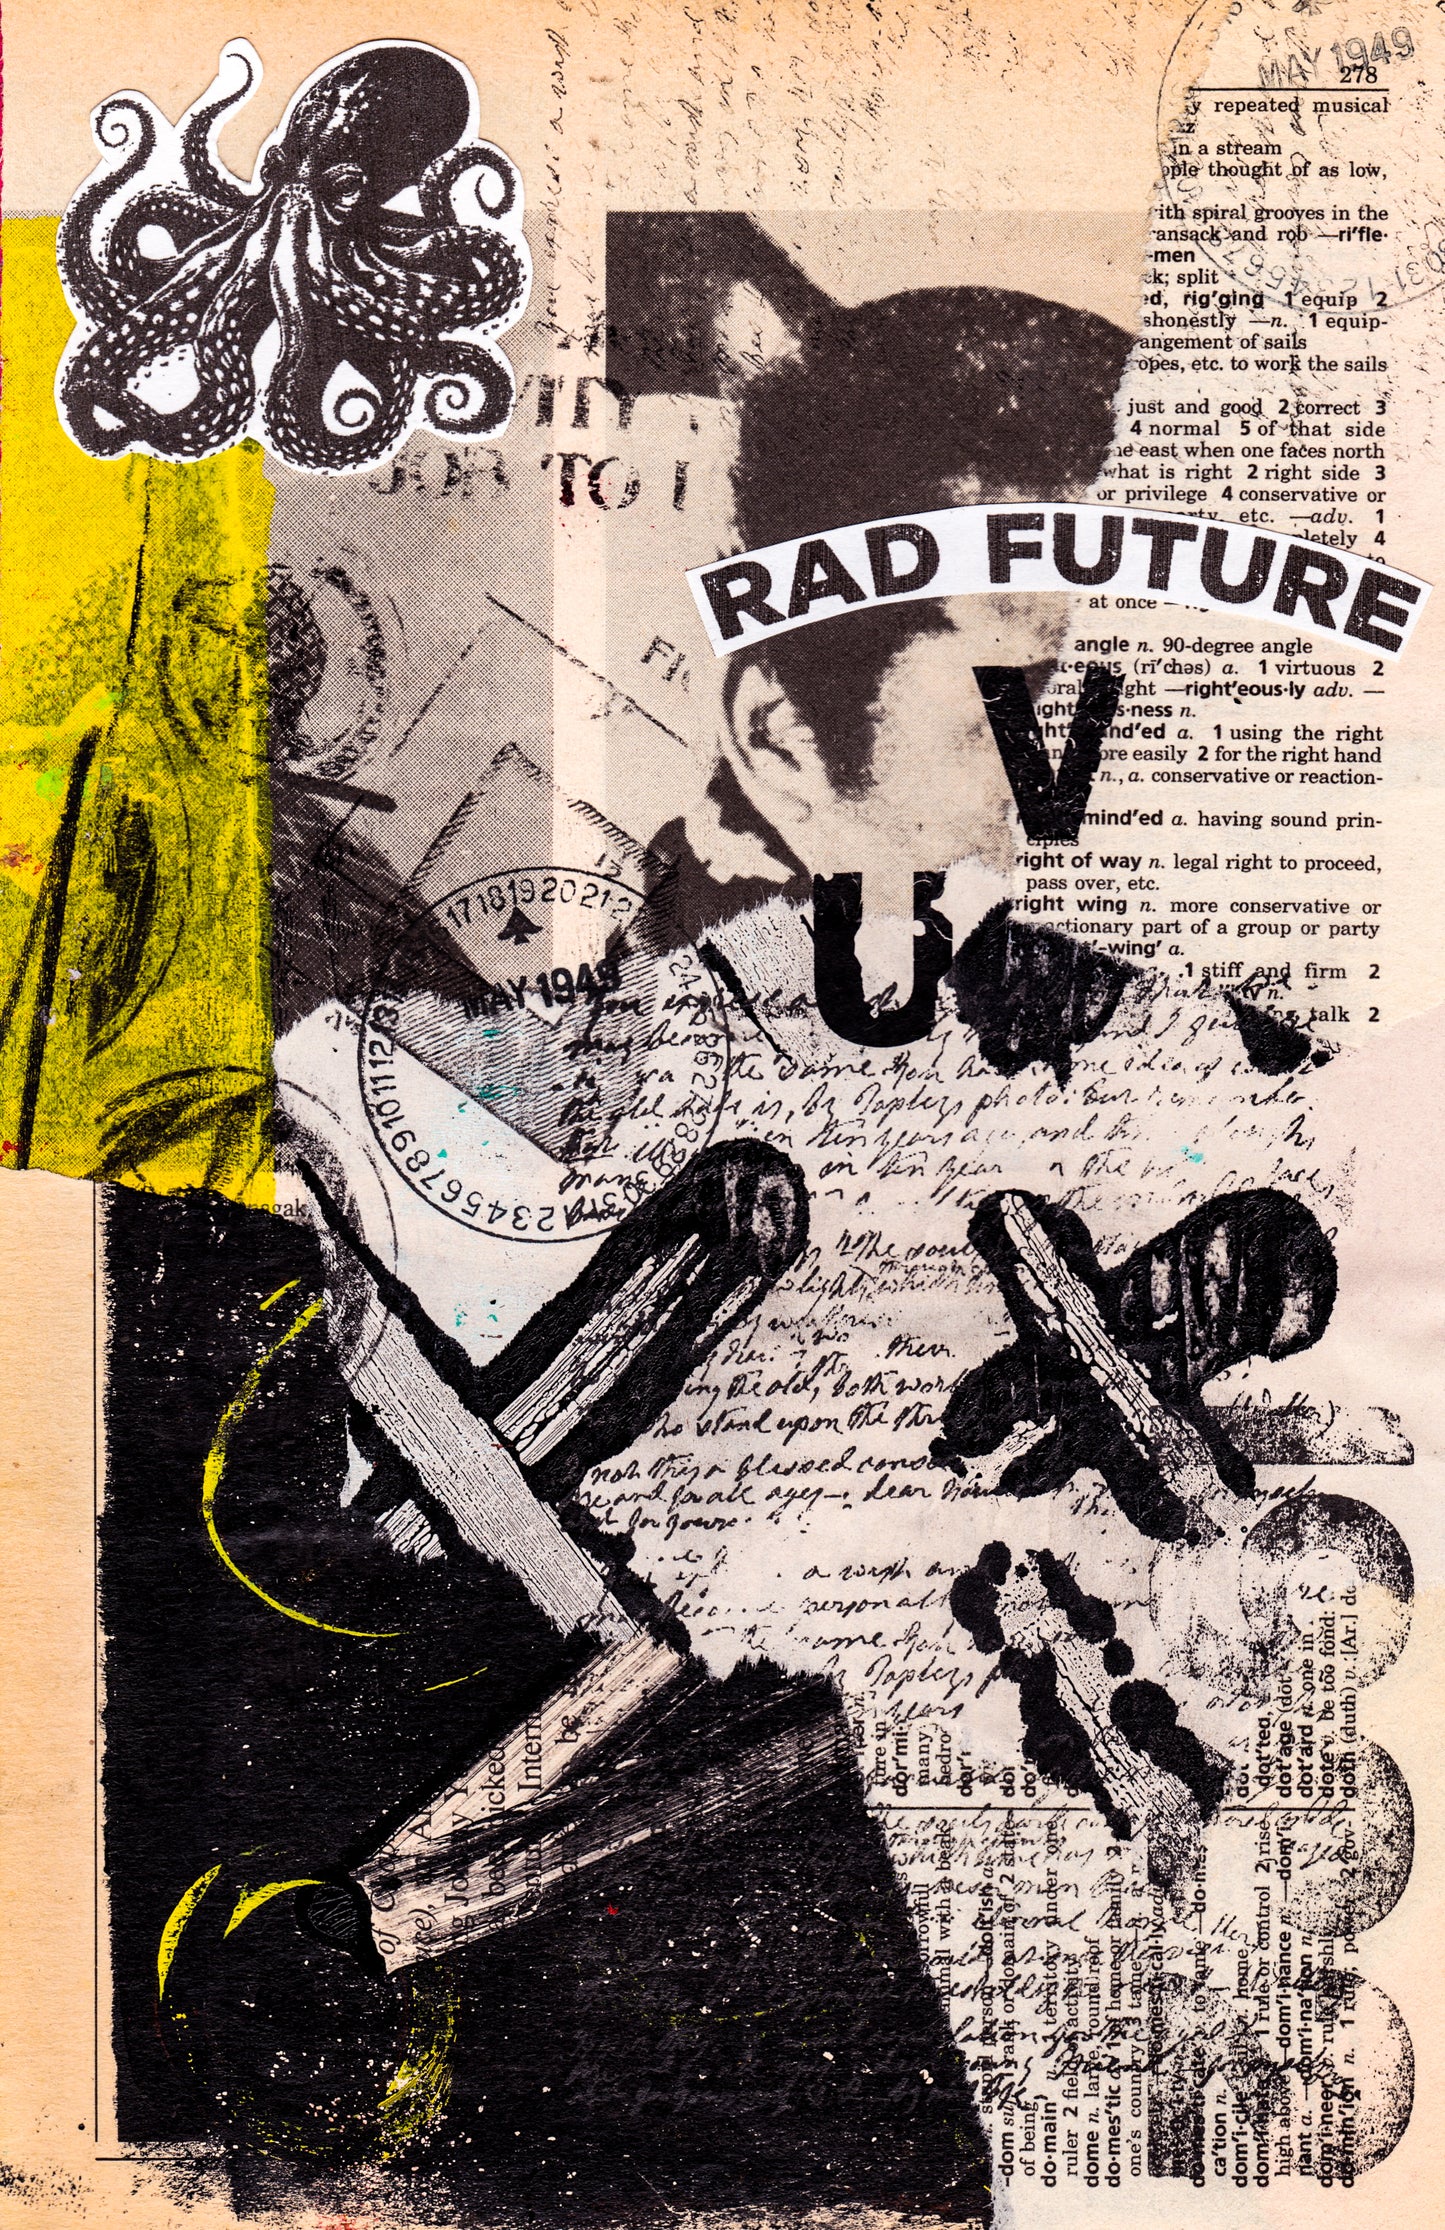 1949 - Rad Future